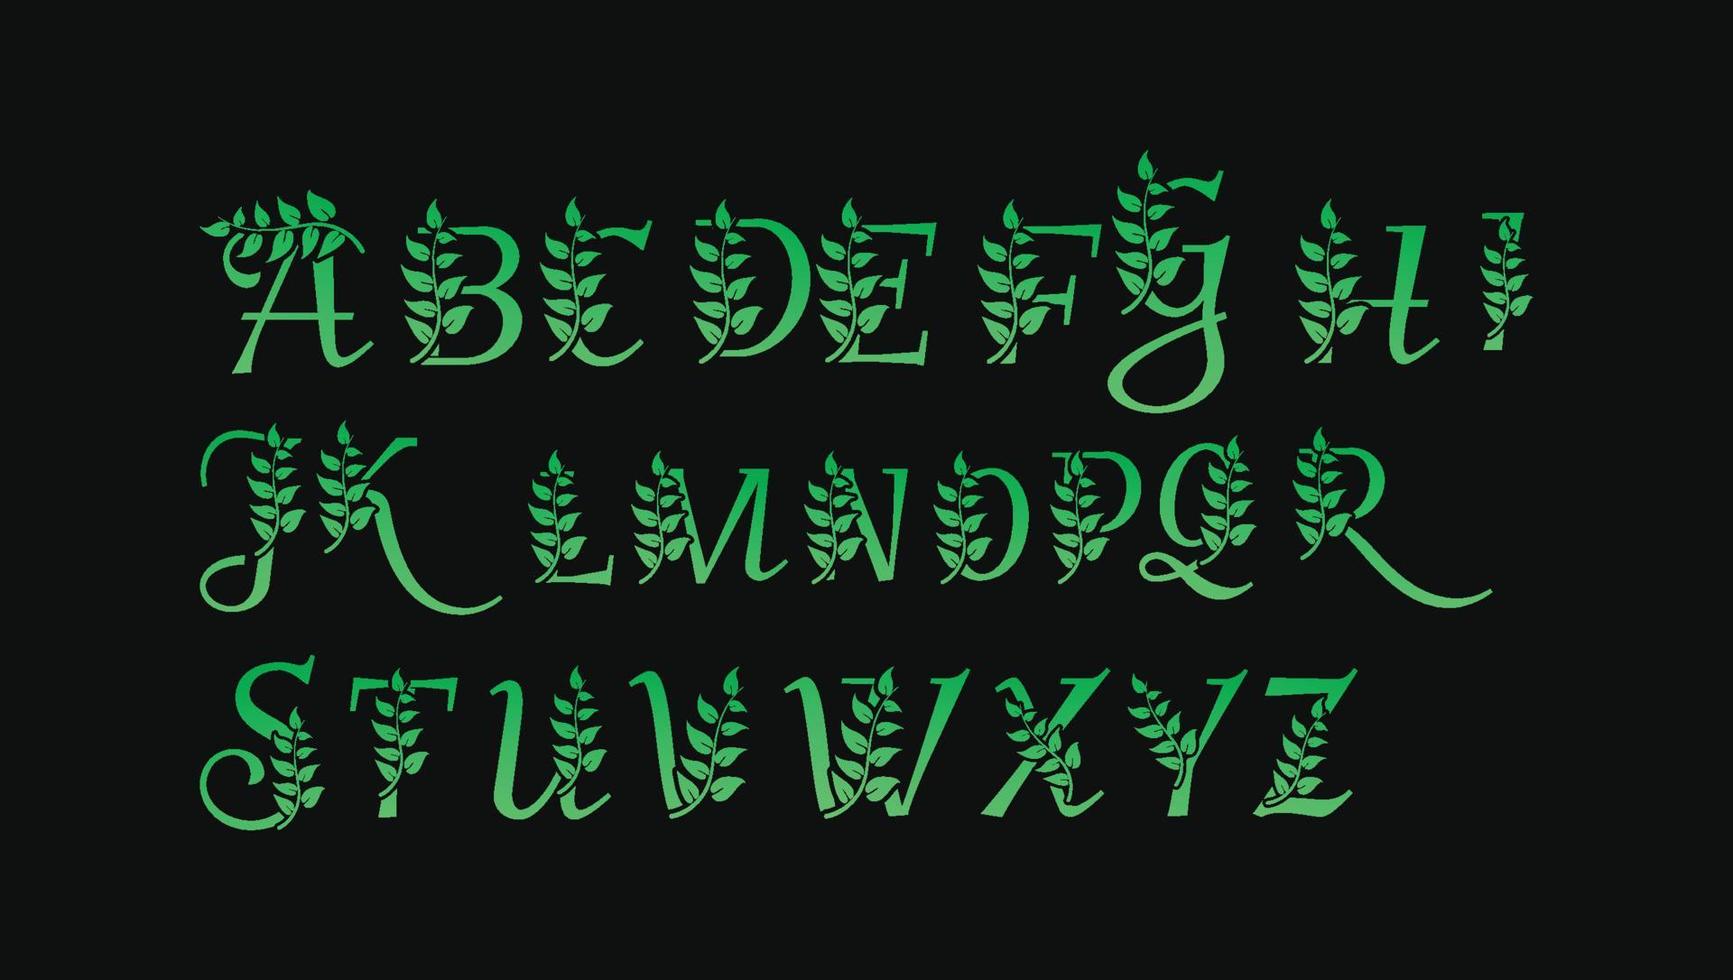 lyx dekorativ smaragd- grön brev ABC alfabet monogram logotyp design mallar vektor